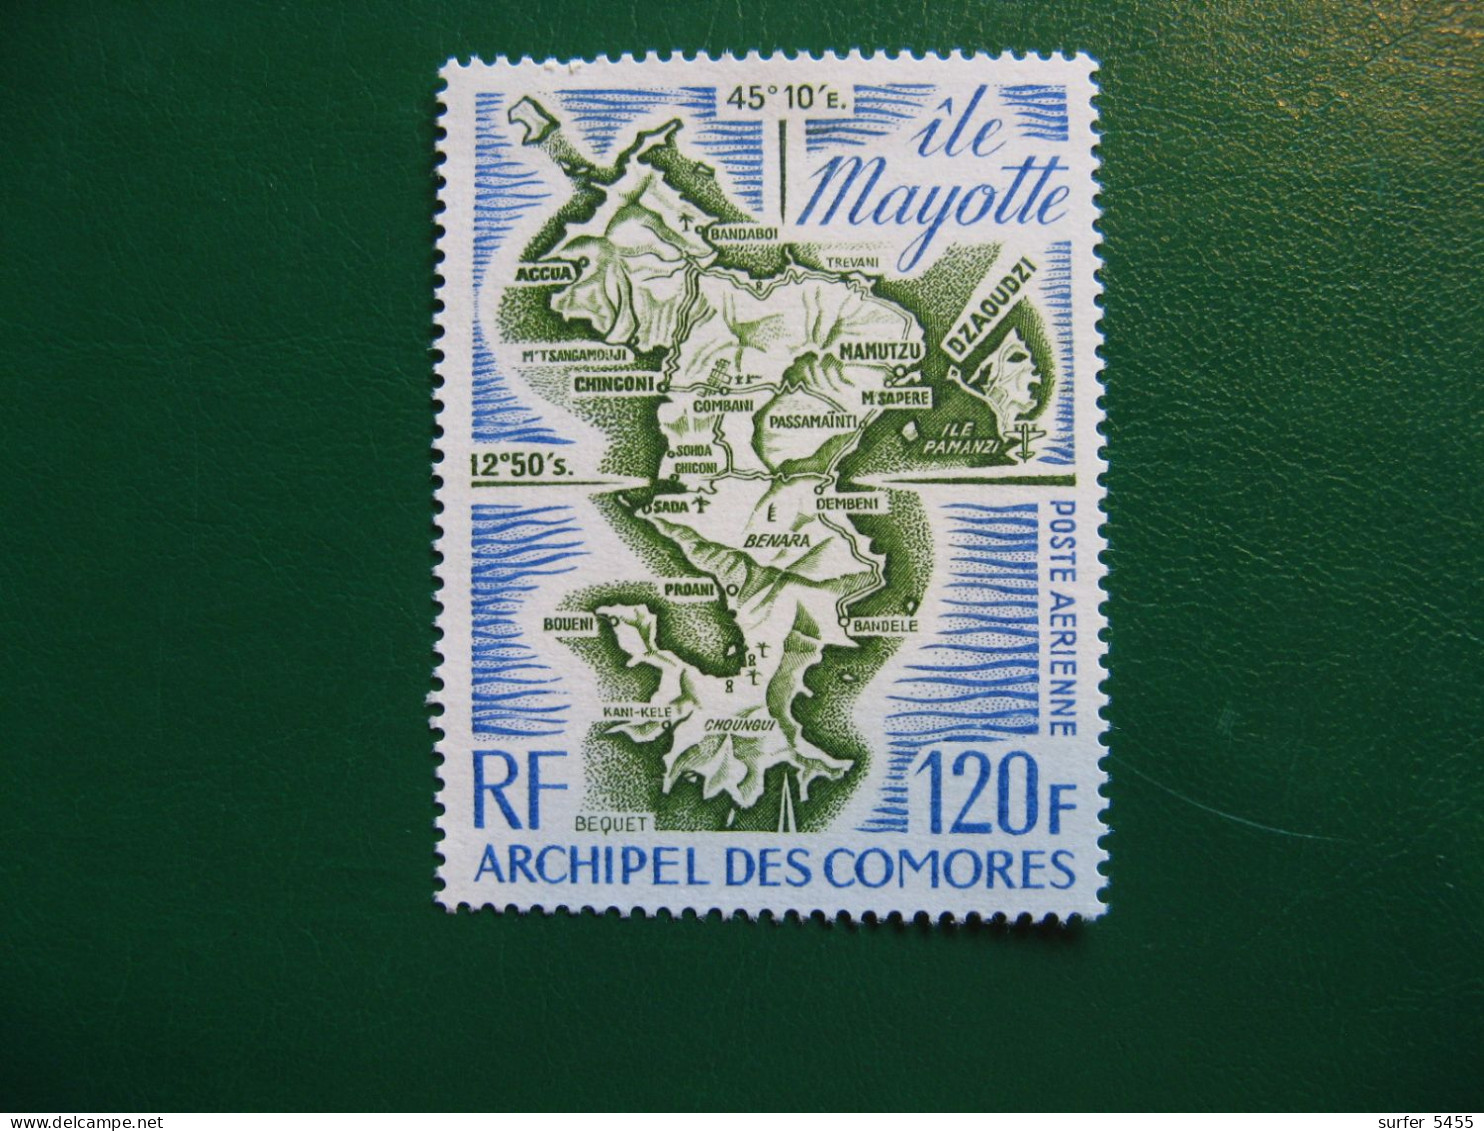 COMORES YVERT POSTE AERIENNE N° 61 TIMBRE NEUF** LUXE - MNH - COTE 12,00 EUROS - Ungebraucht